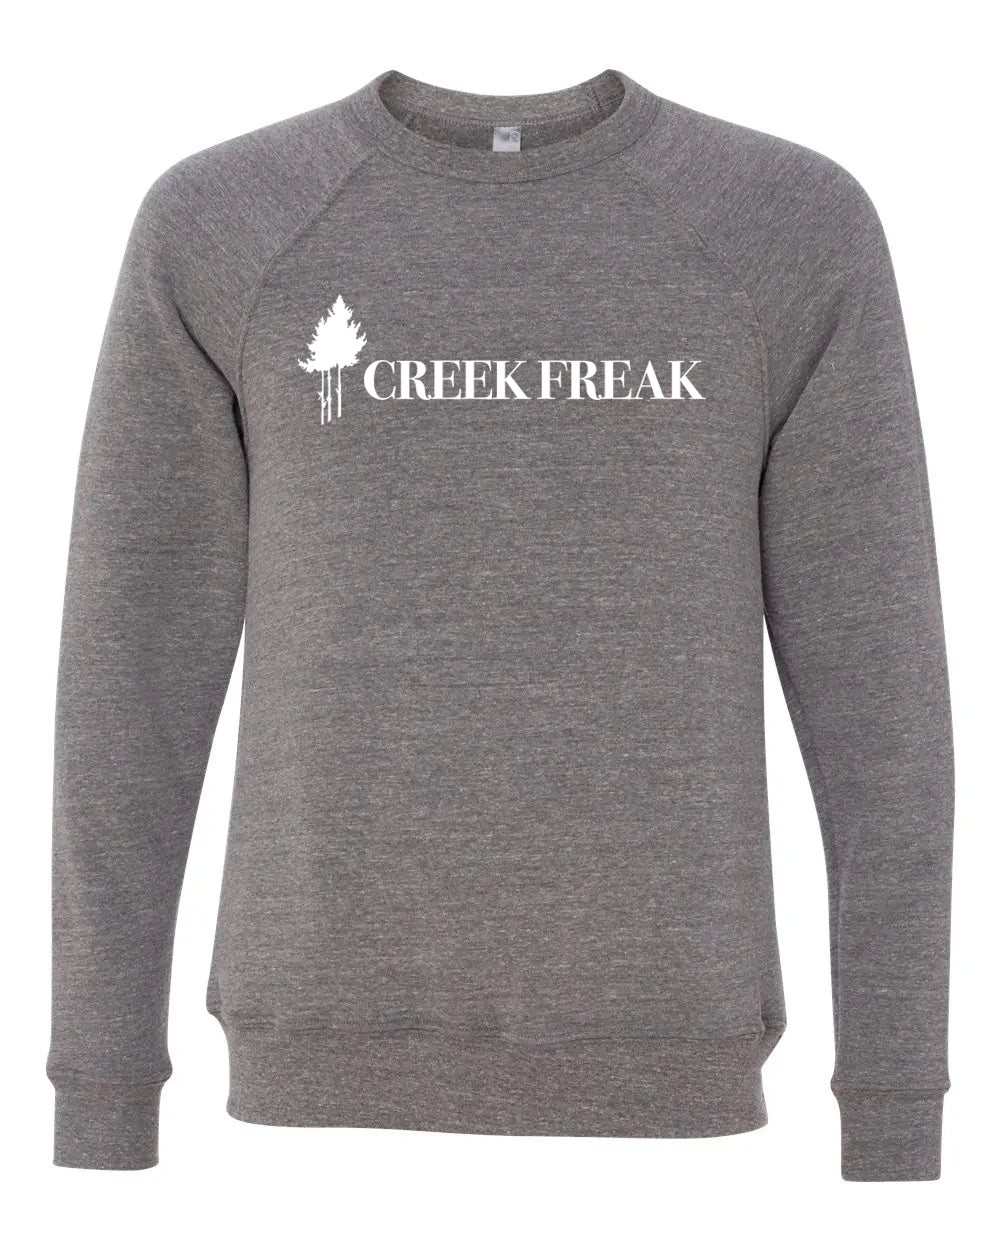 CREEK FREAK Crews | Unsettled Apparel